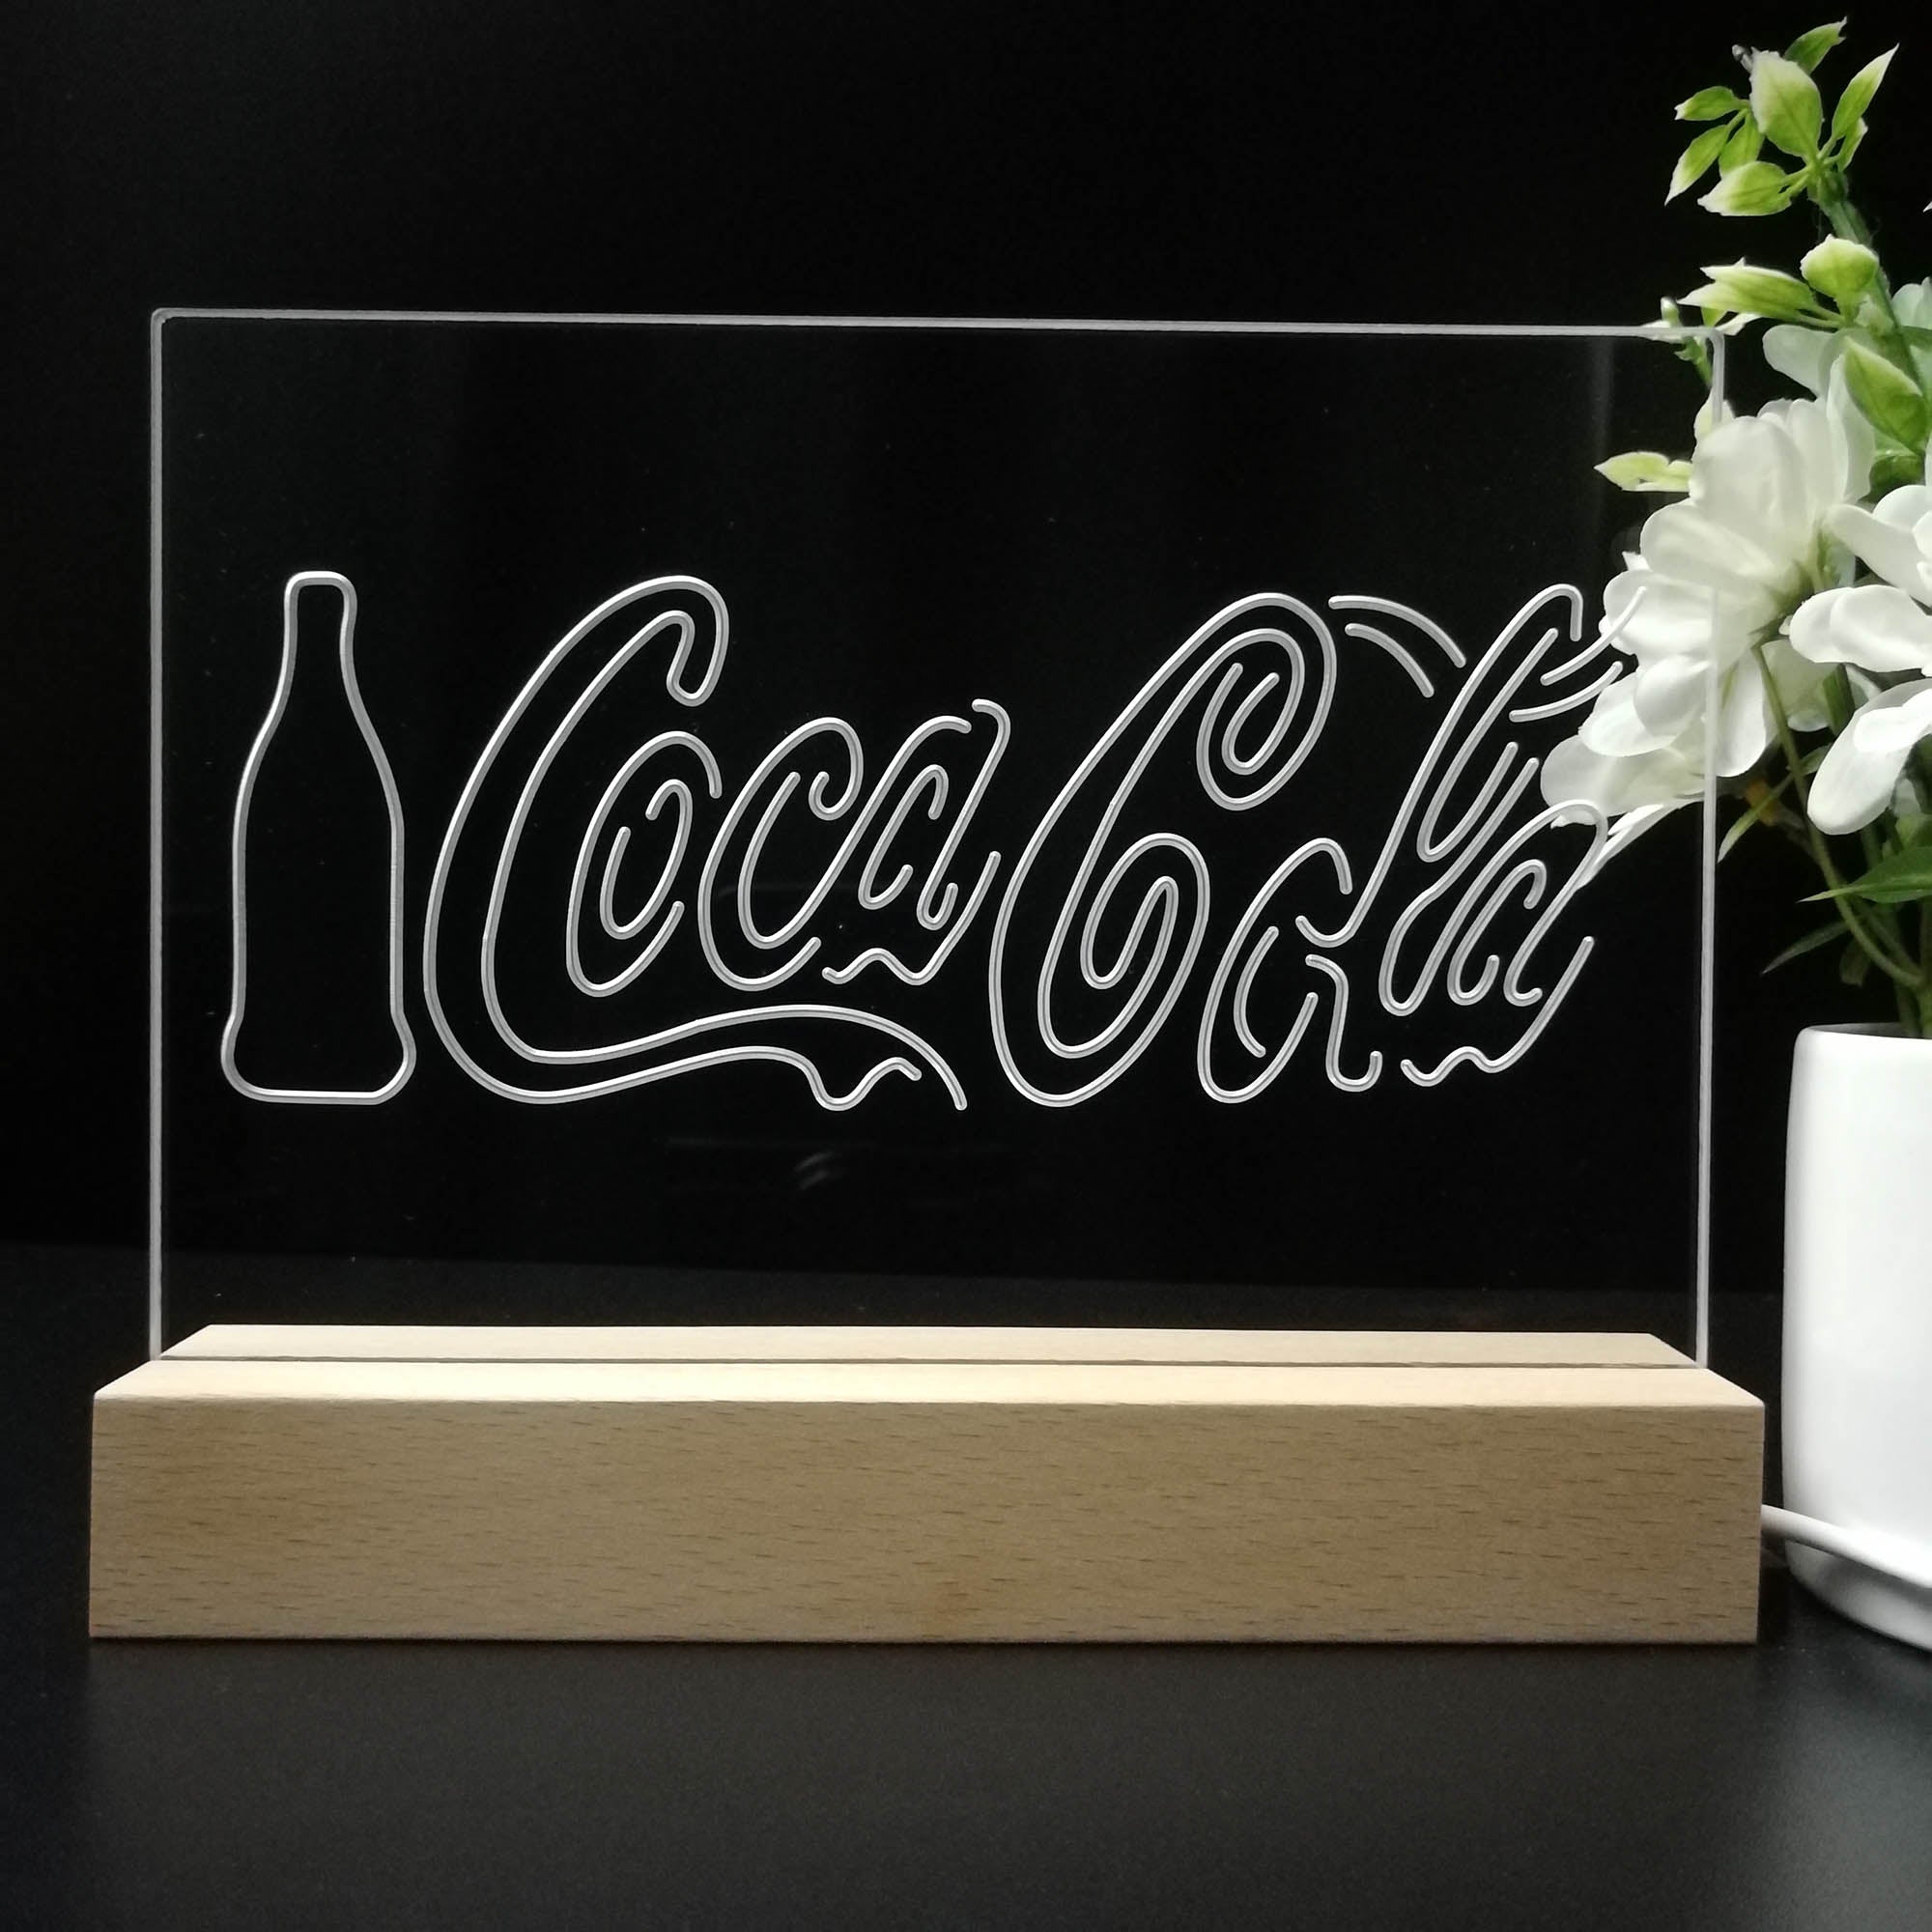 Coca Cola Bottle Display Neon Sign Pub Bar Lamp